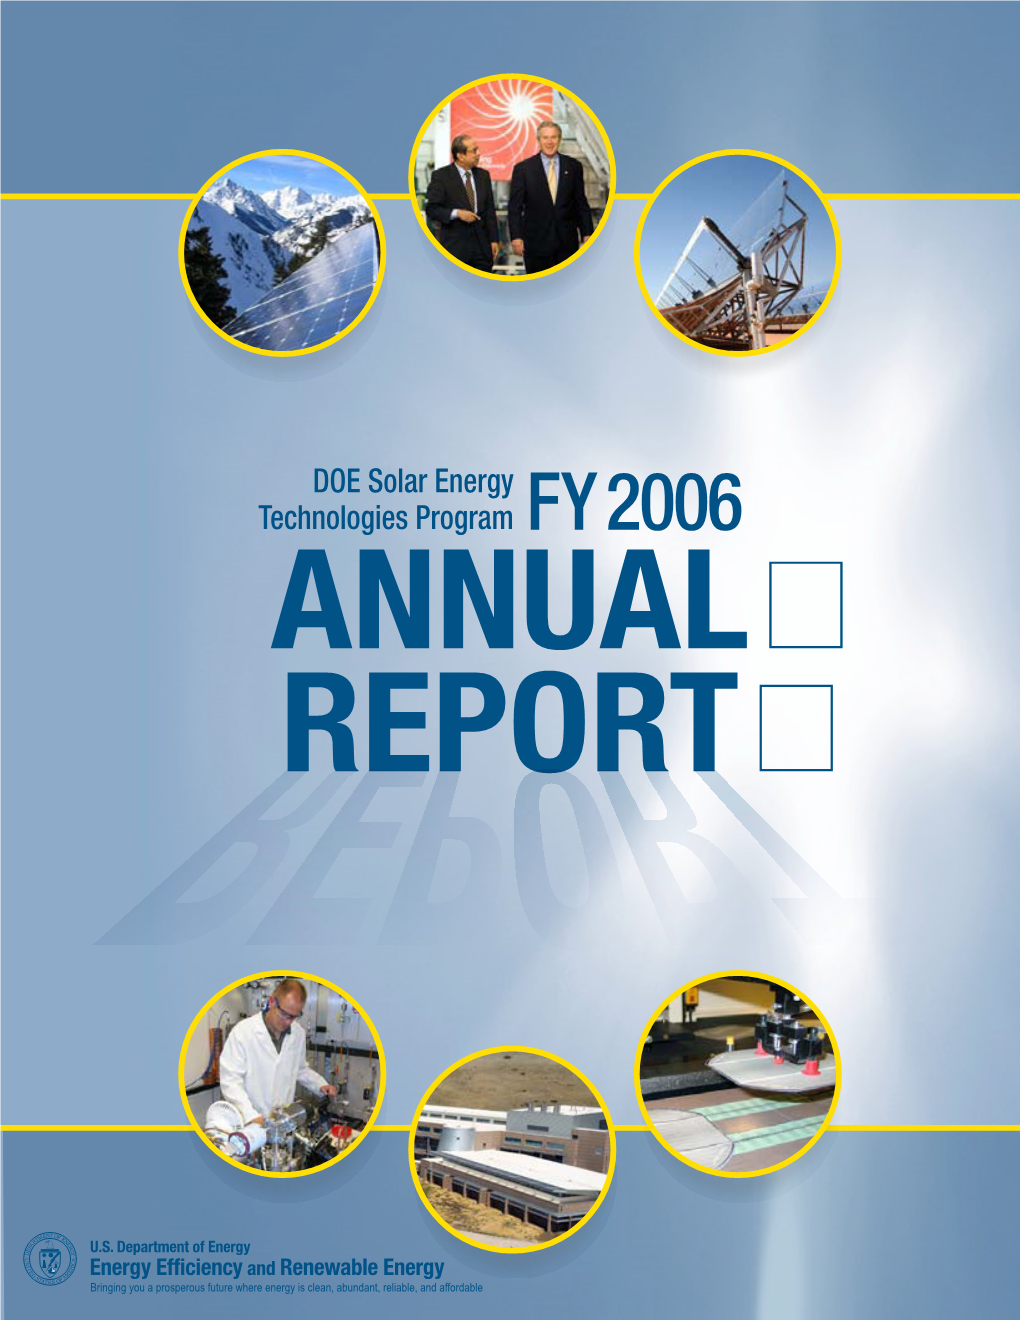 DOE Solar Energy Technologies Program FY 2006 ANNUAL REPORT